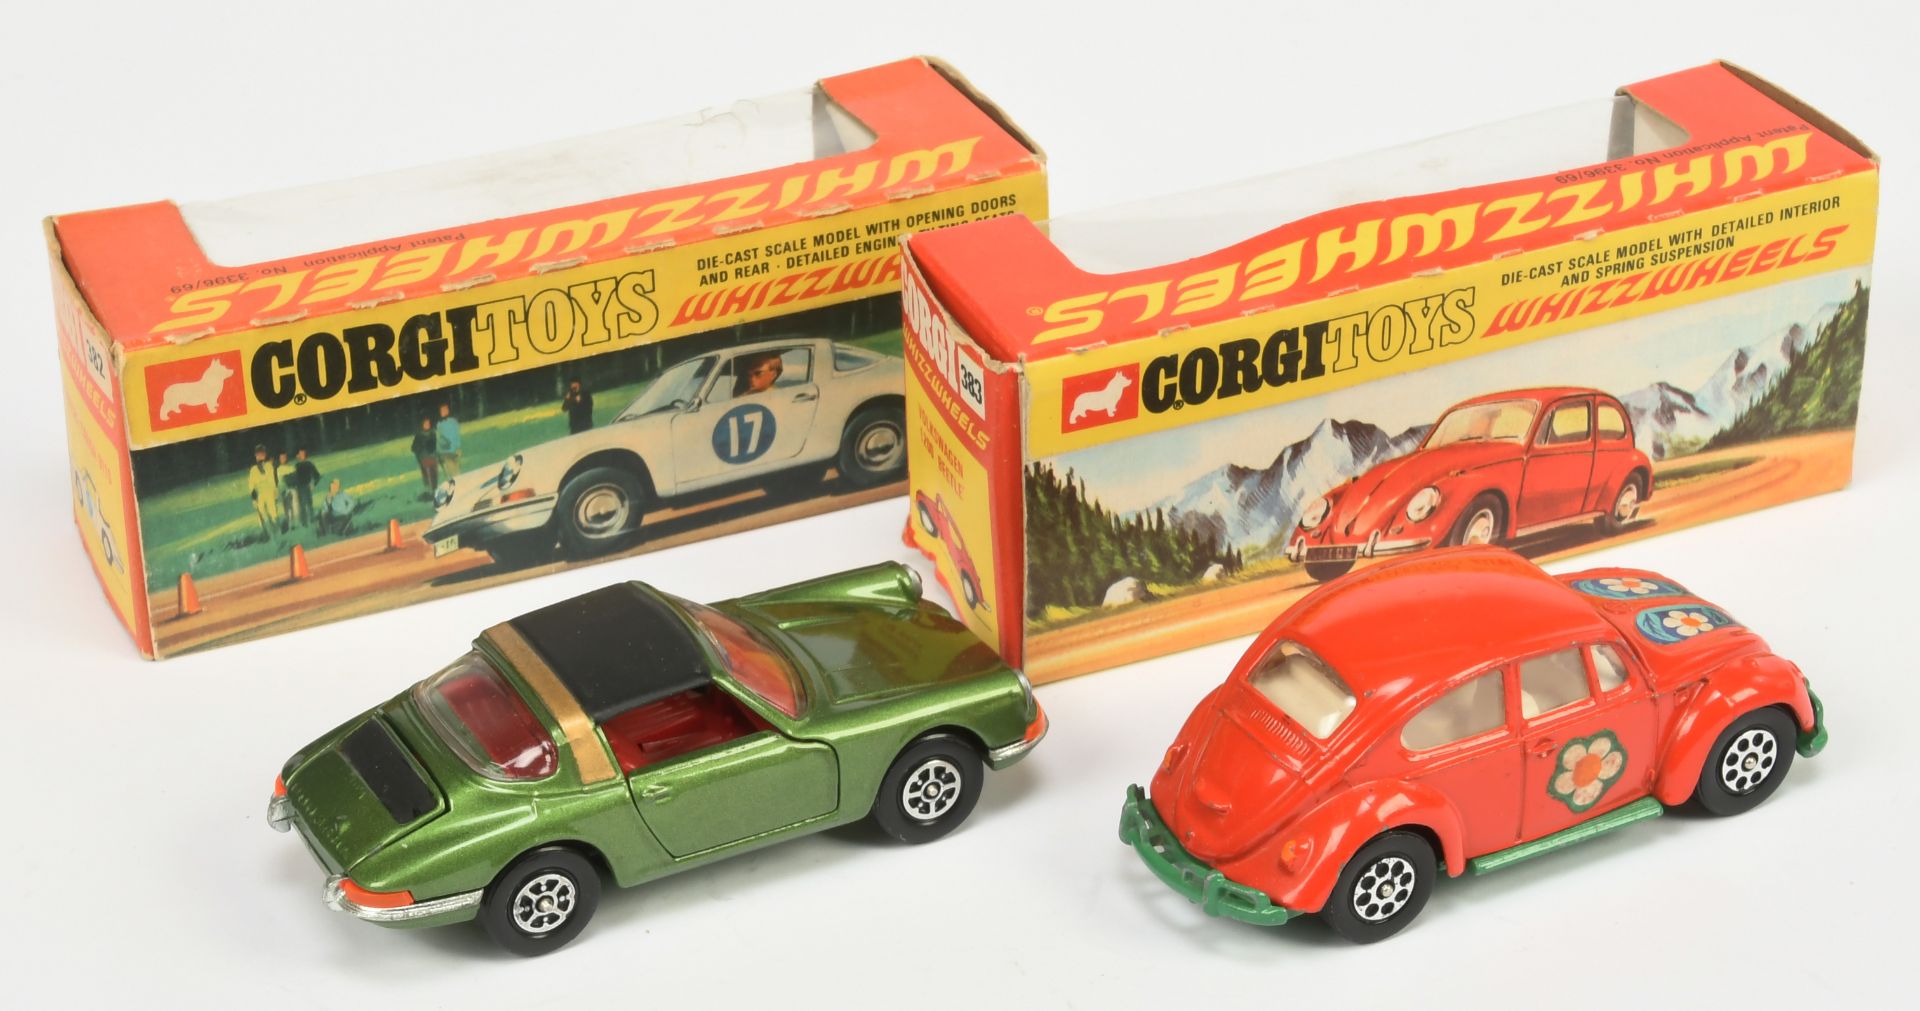 Corgi Toys Whizzwheels 382 Porsche 911 Targa - Green body, black roof panel with gold band, red i... - Image 2 of 2